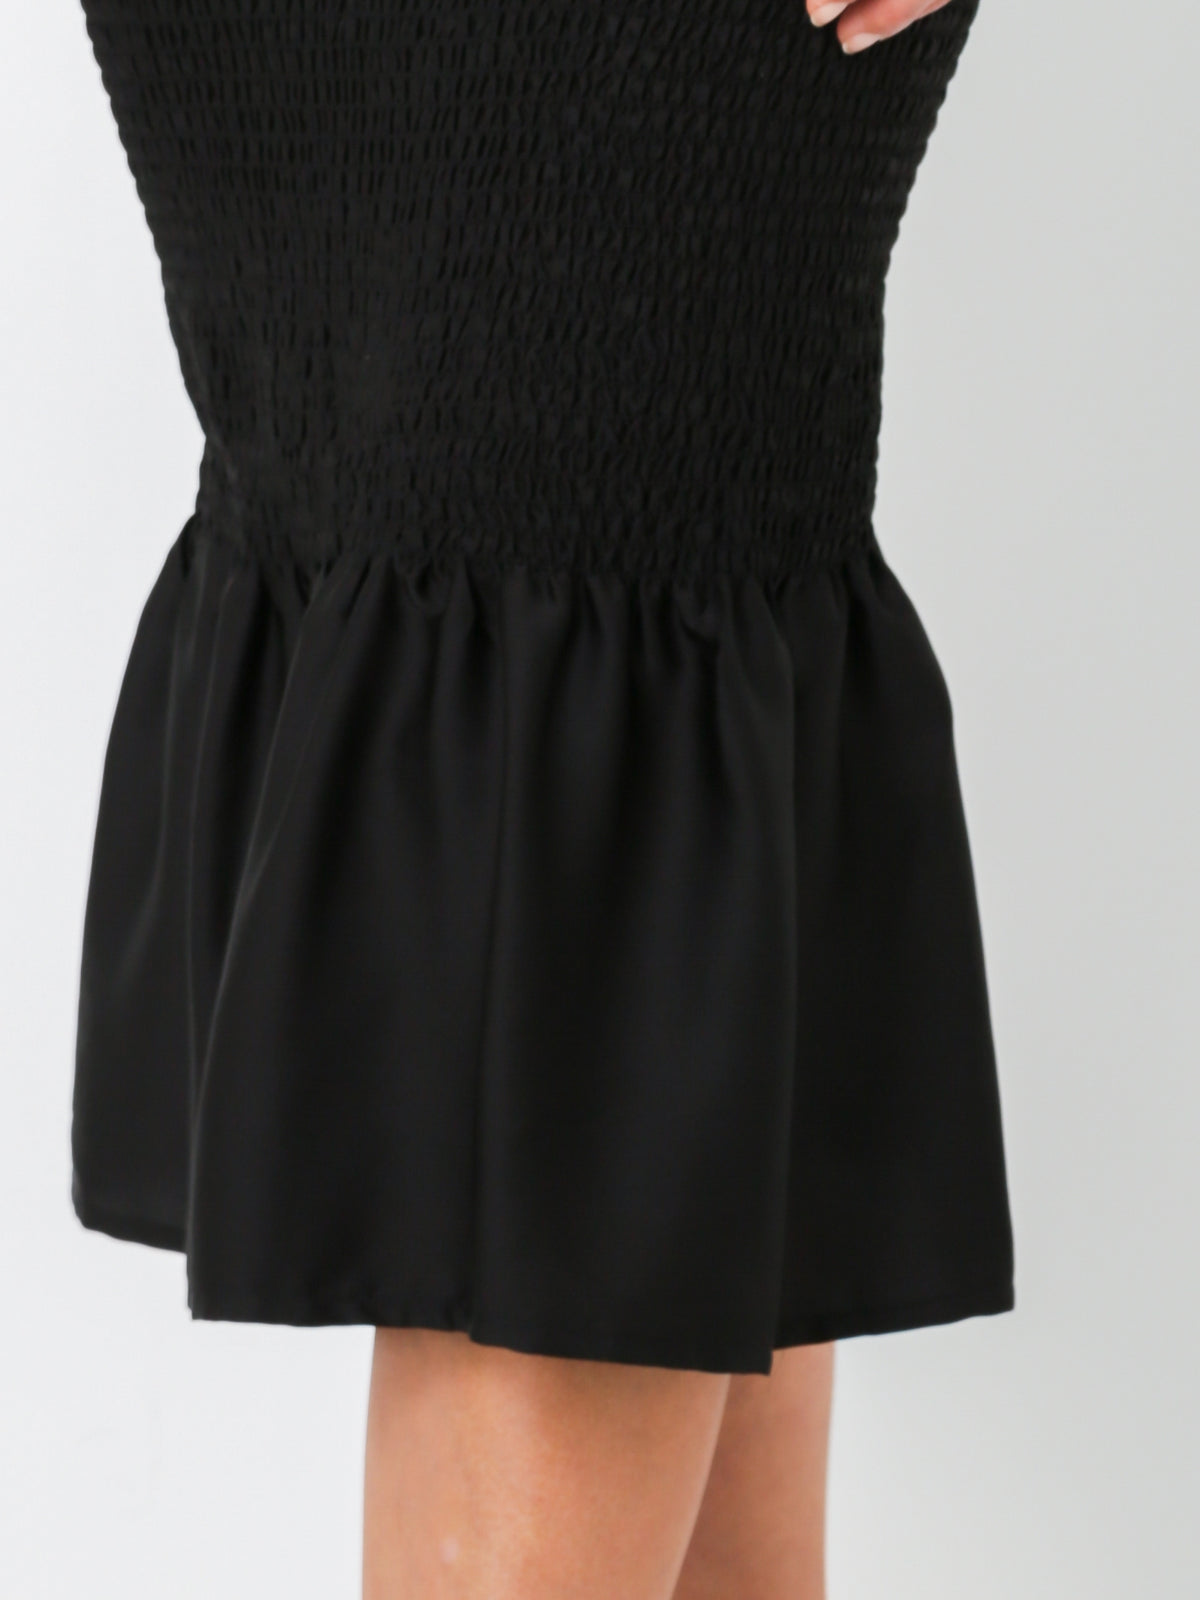 Isa Skirt in Black